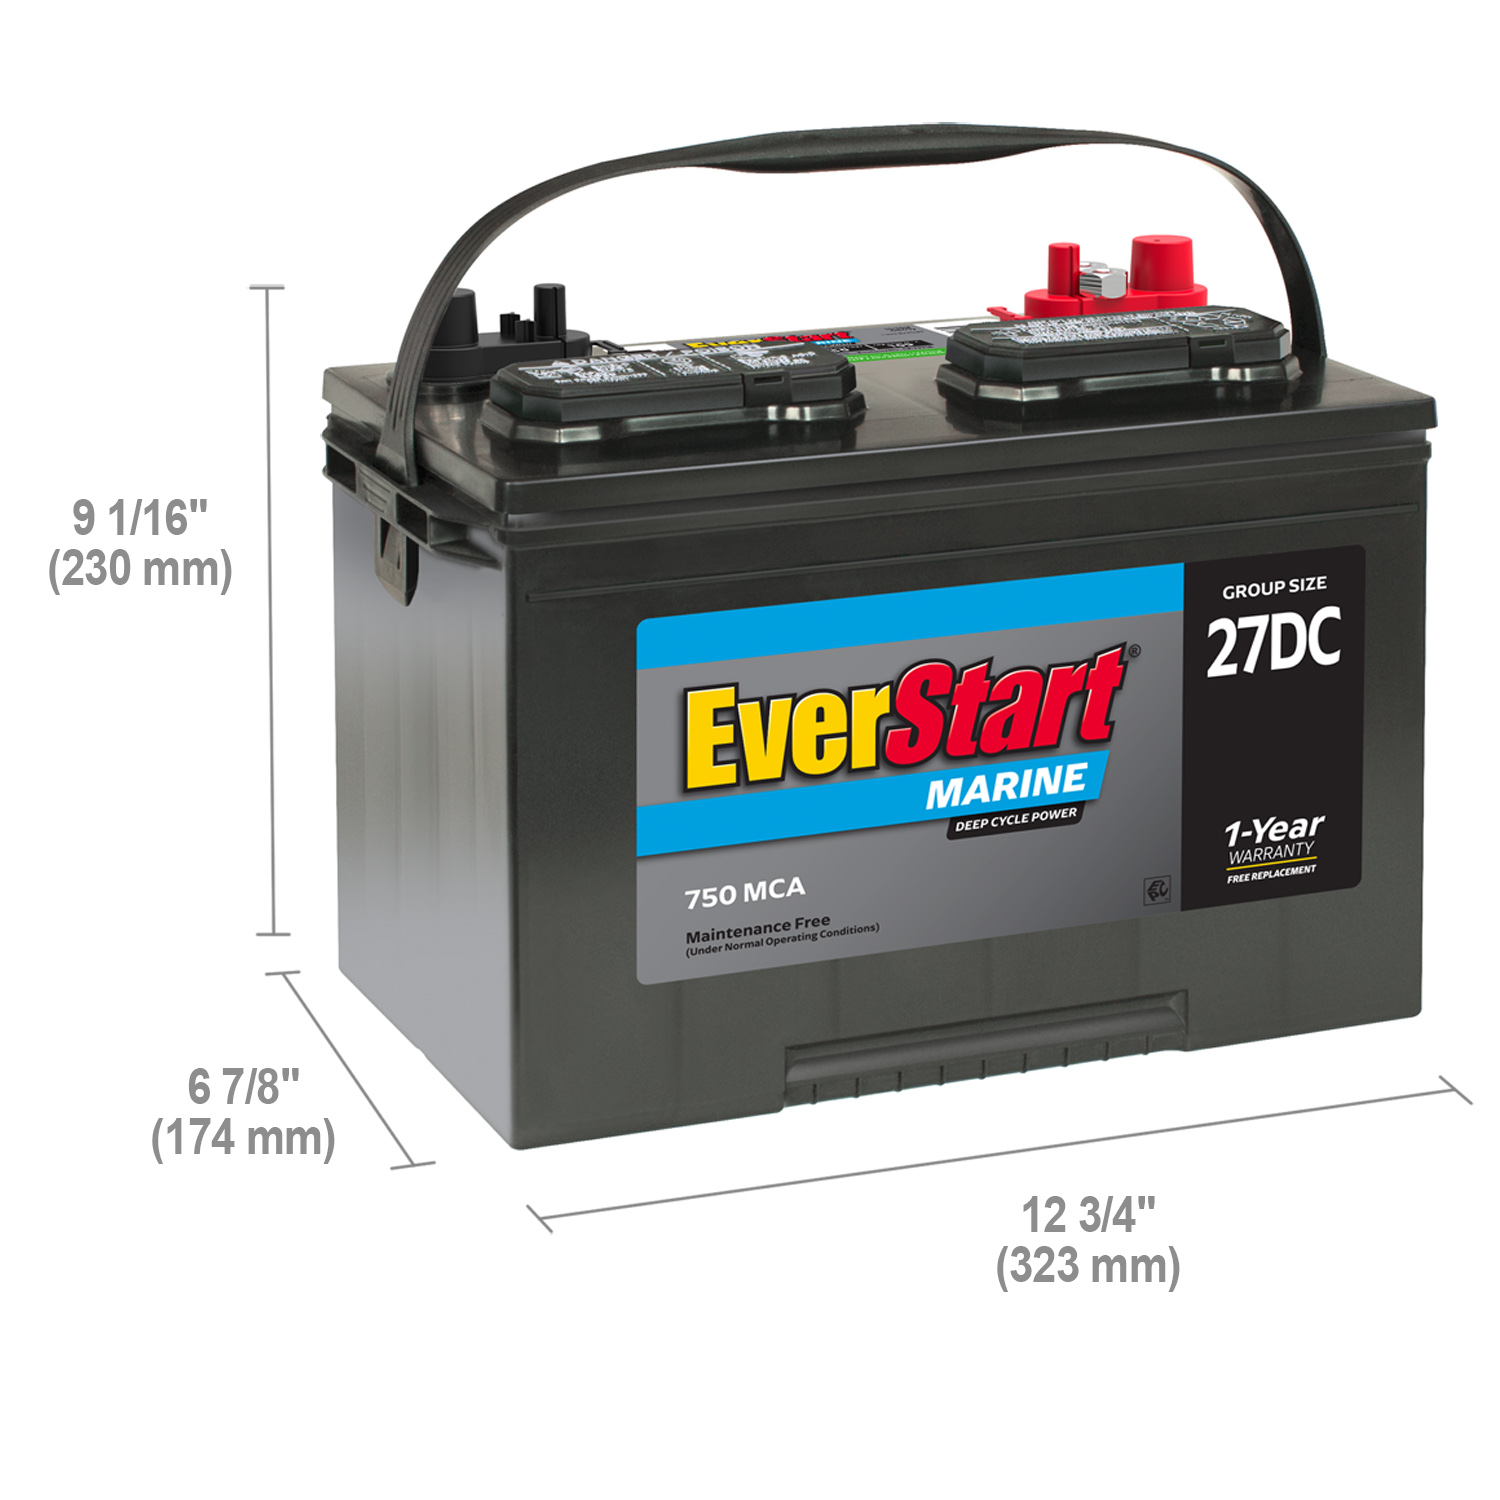 EverStart Lead Acid Marine & RV Deep Cycle Battery, Group Size 27DC 12 Volt, 750 MCA - image 2 of 7